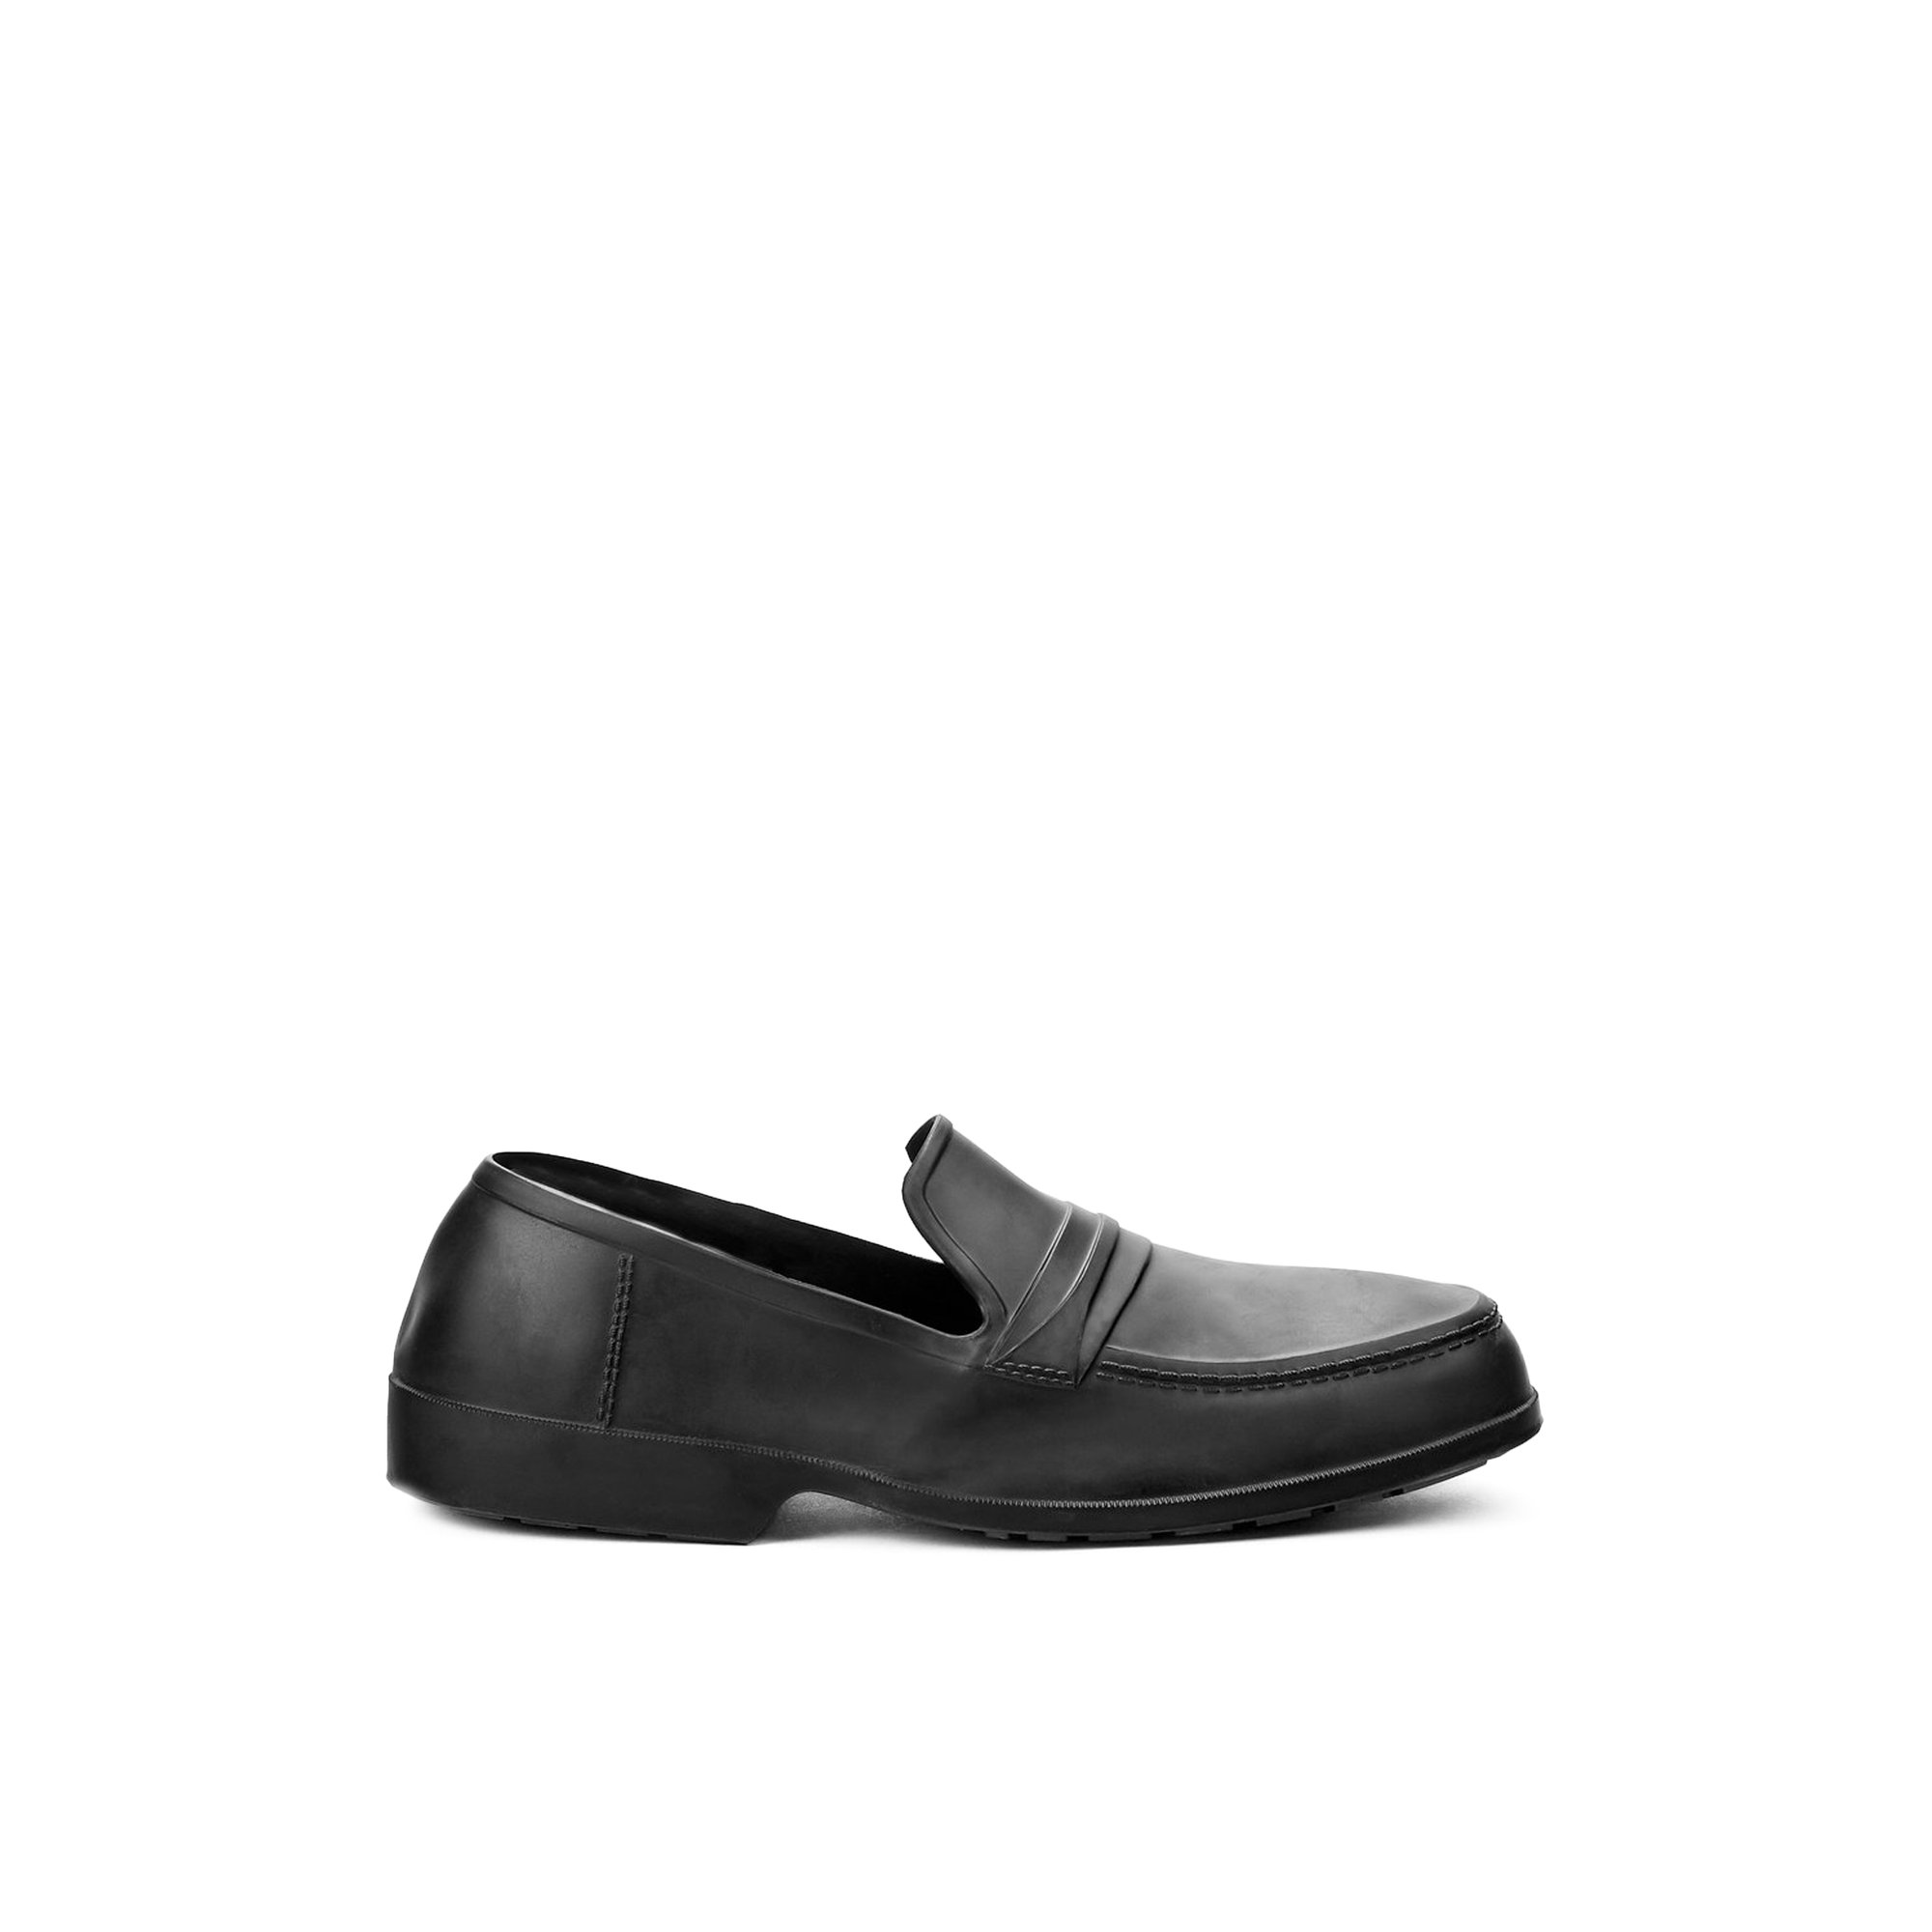 Acton Urbain - Men's Footwear Boots Overshoes - Black photo